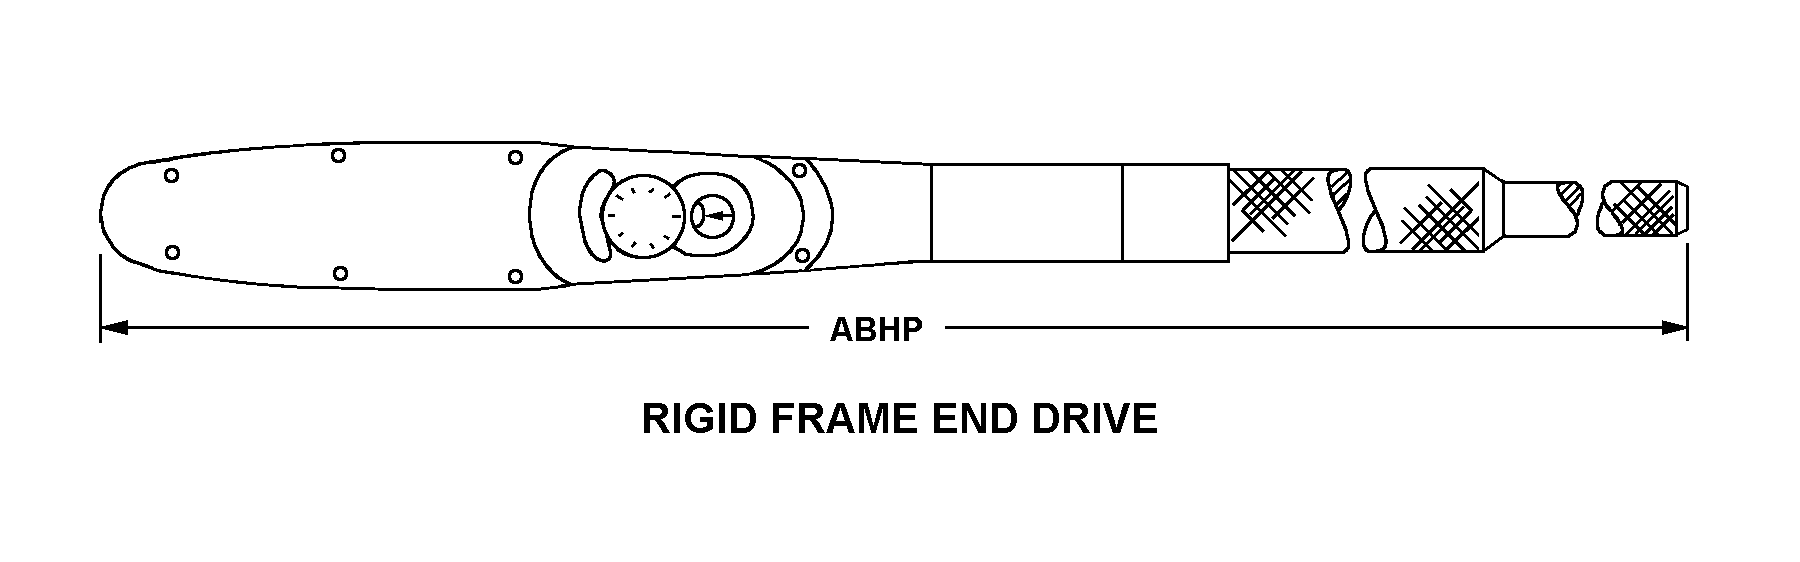 RIGID FRAME END DRIVE style nsn 5120-01-399-8991